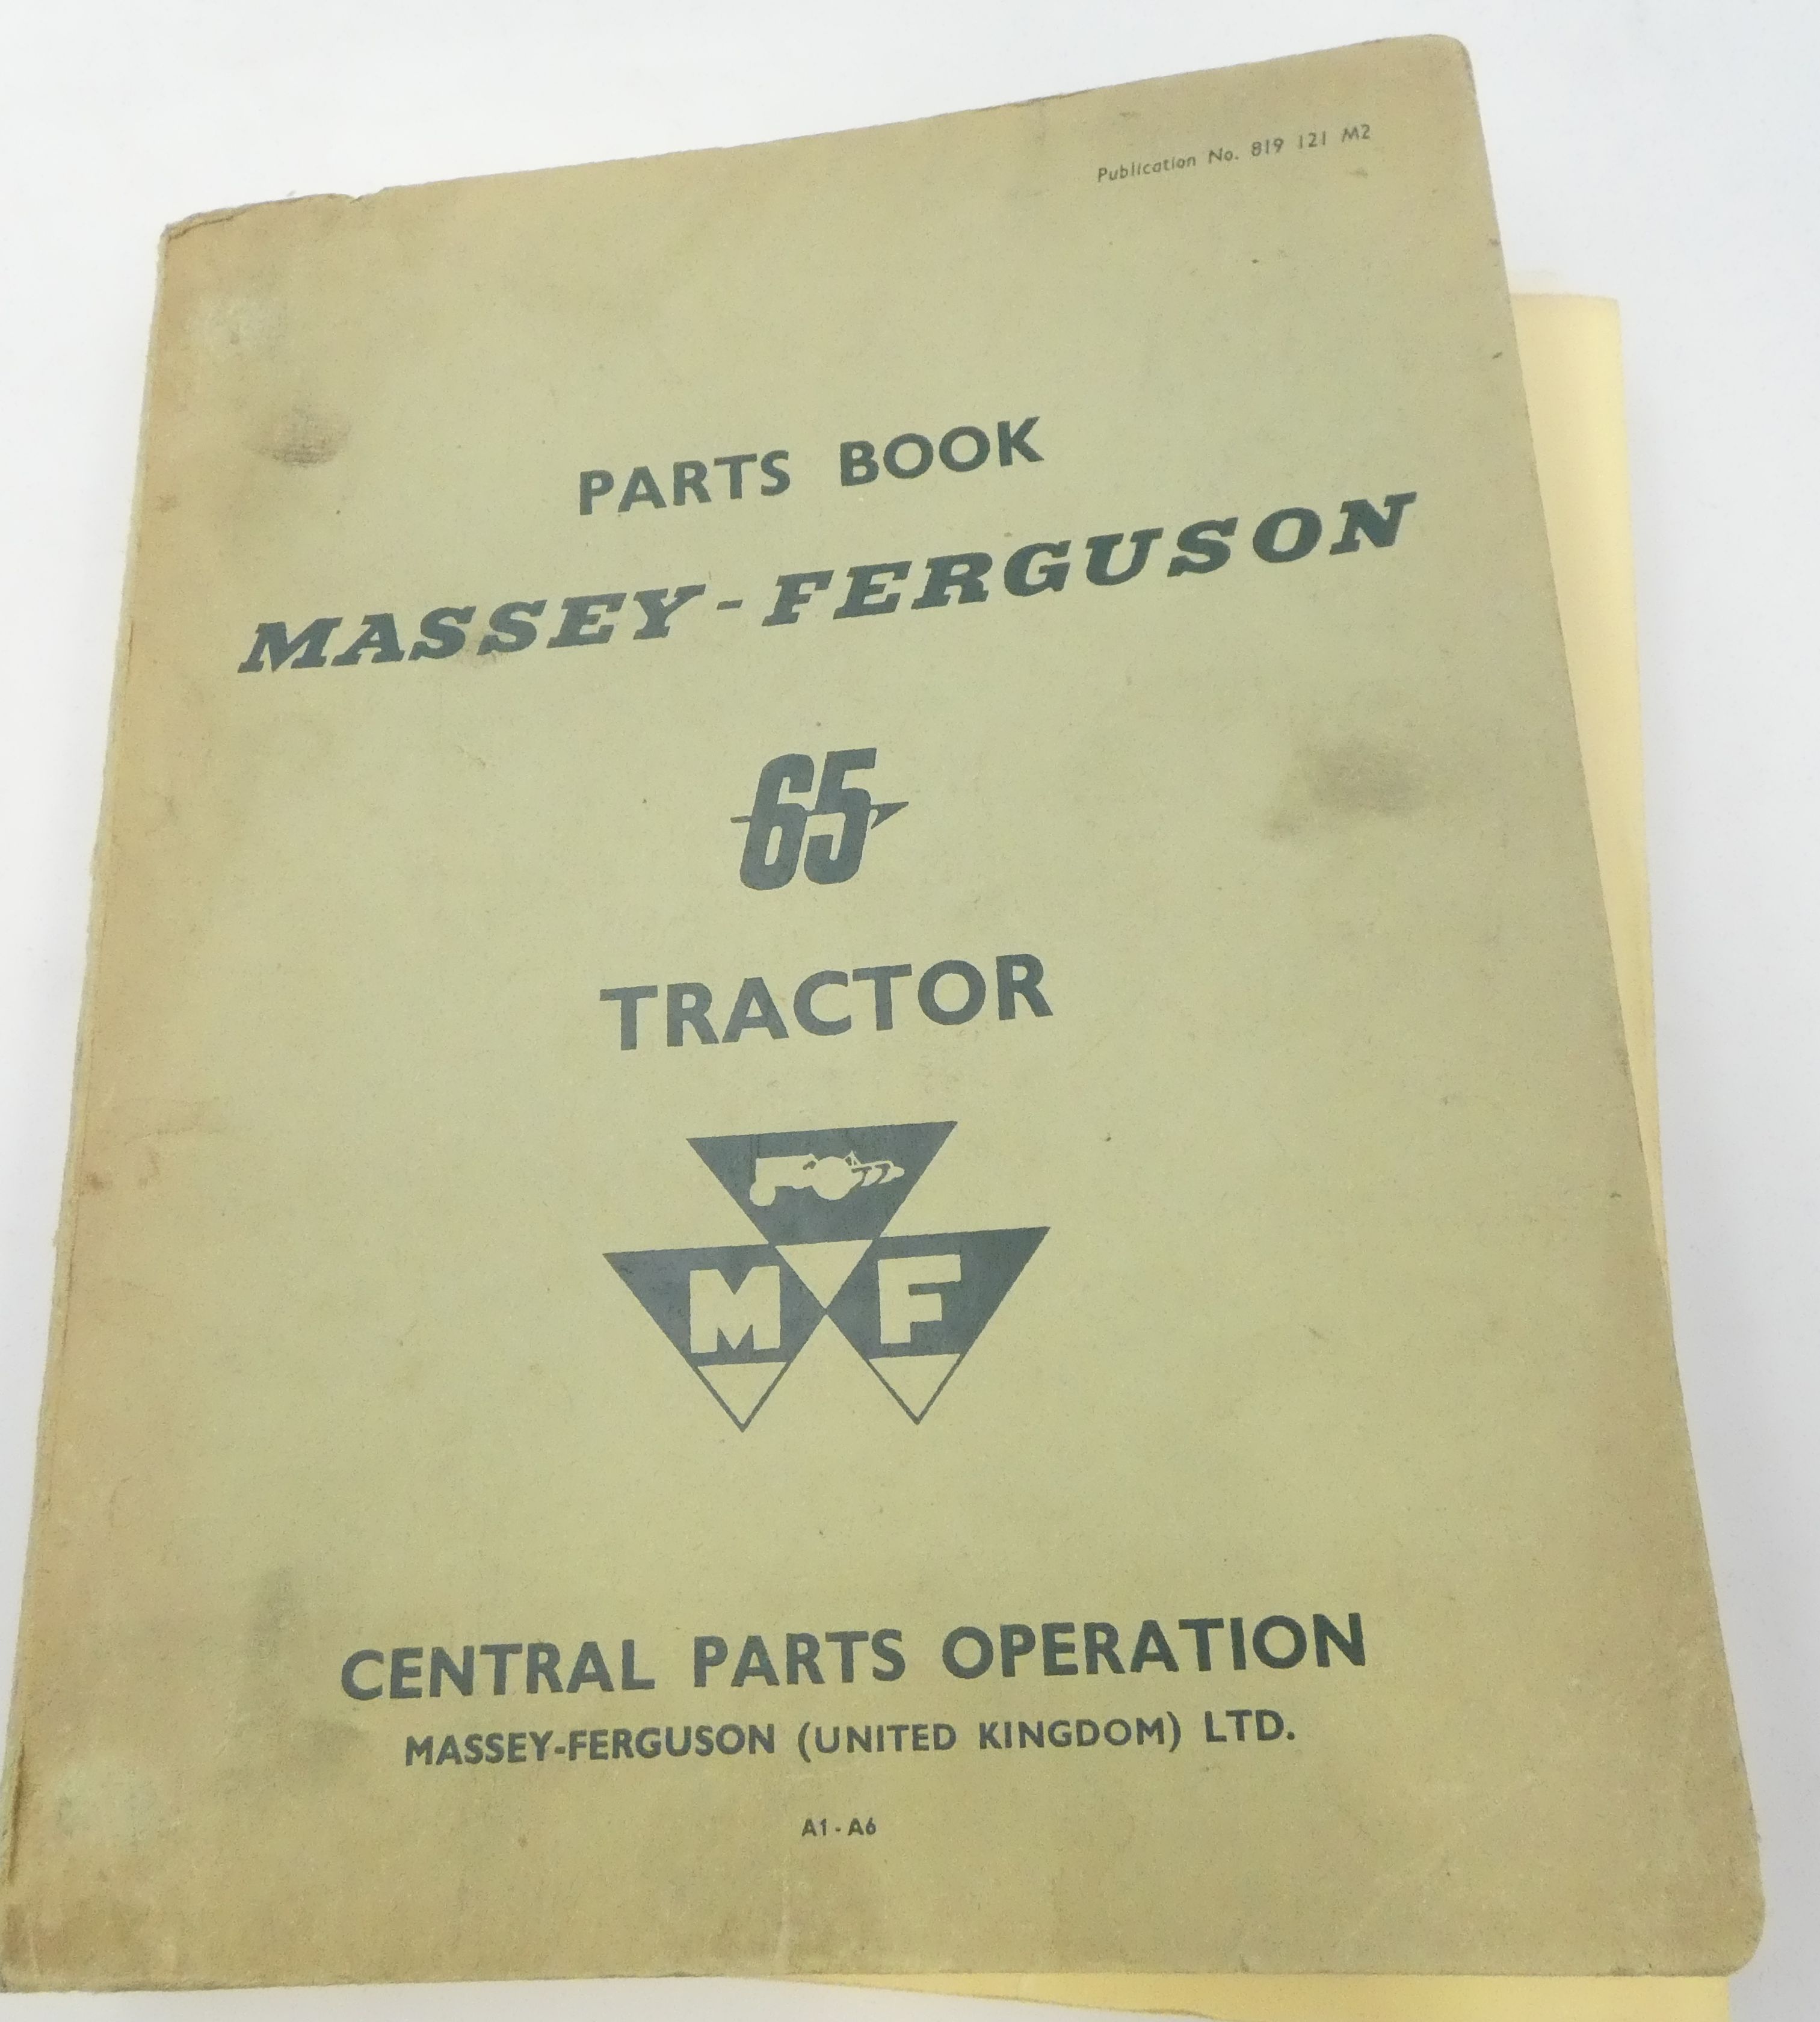 Massey-Ferguson 65 tractor parts book